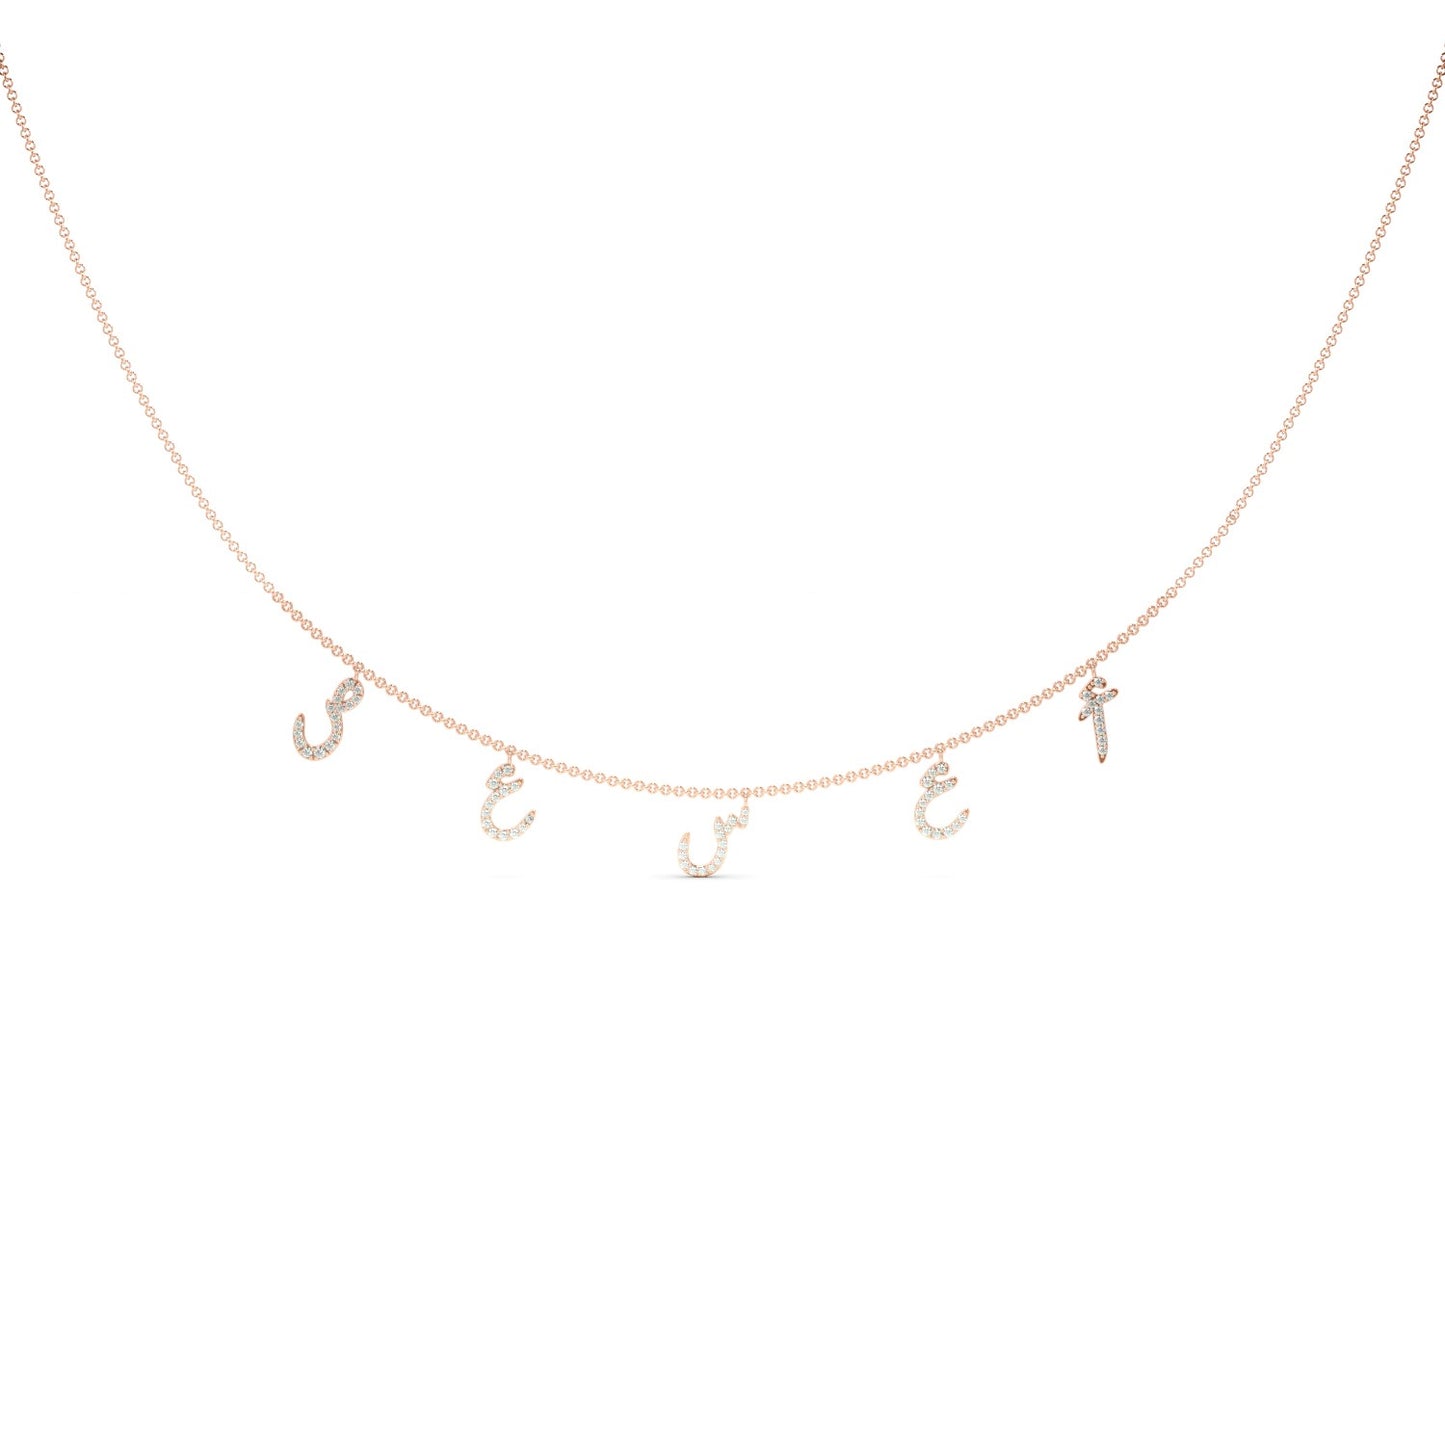 Customize your 5-Letter Pavé Diamond Necklace